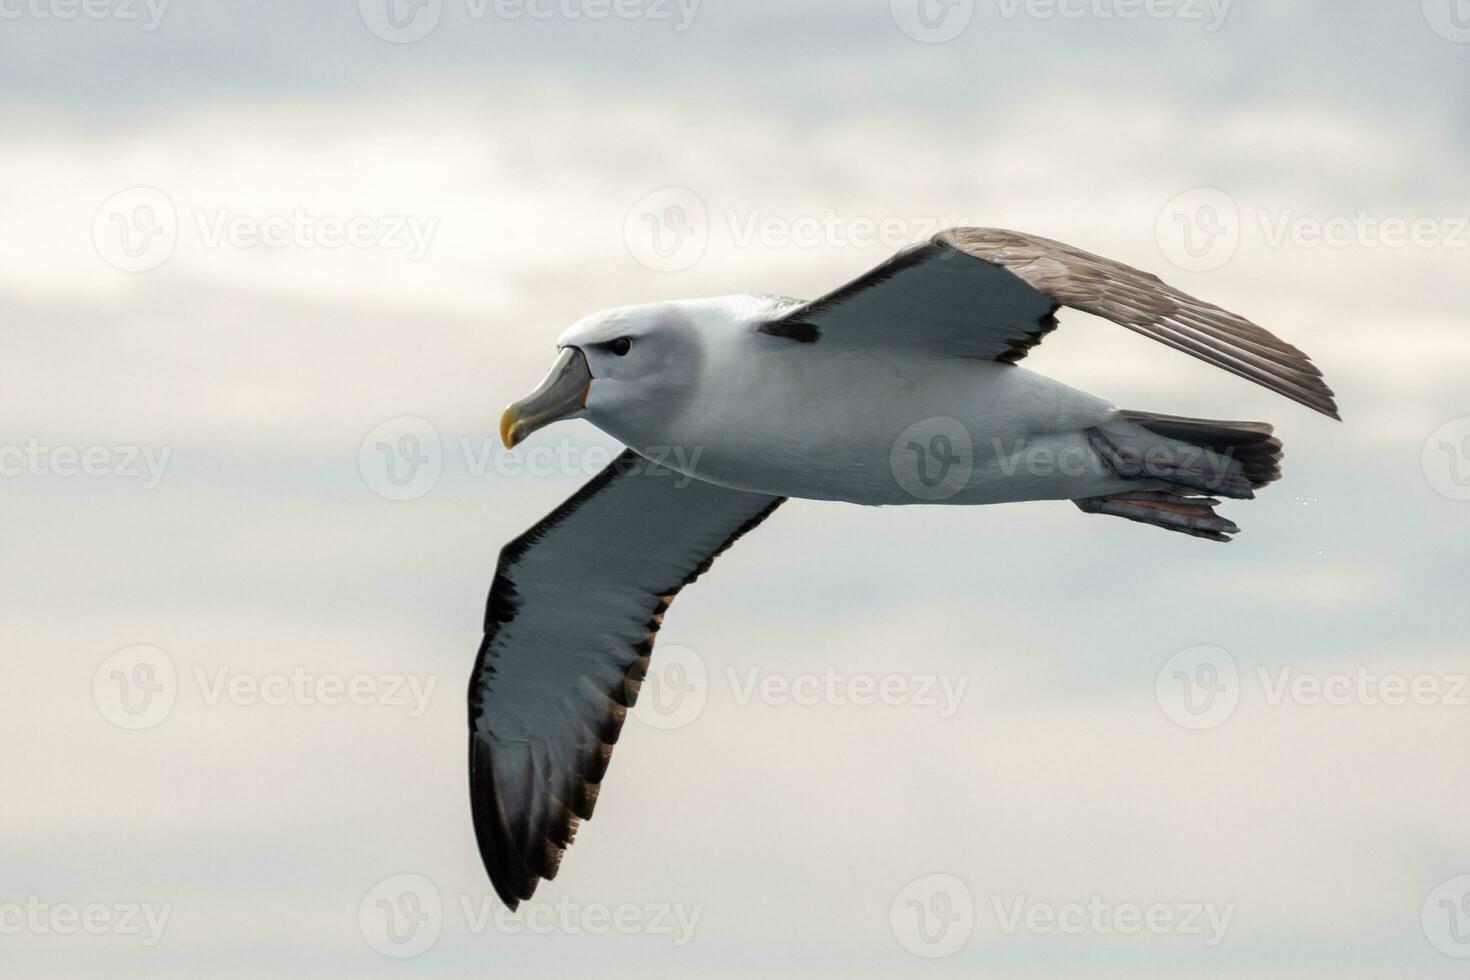 salvin's mollymawk albatros foto